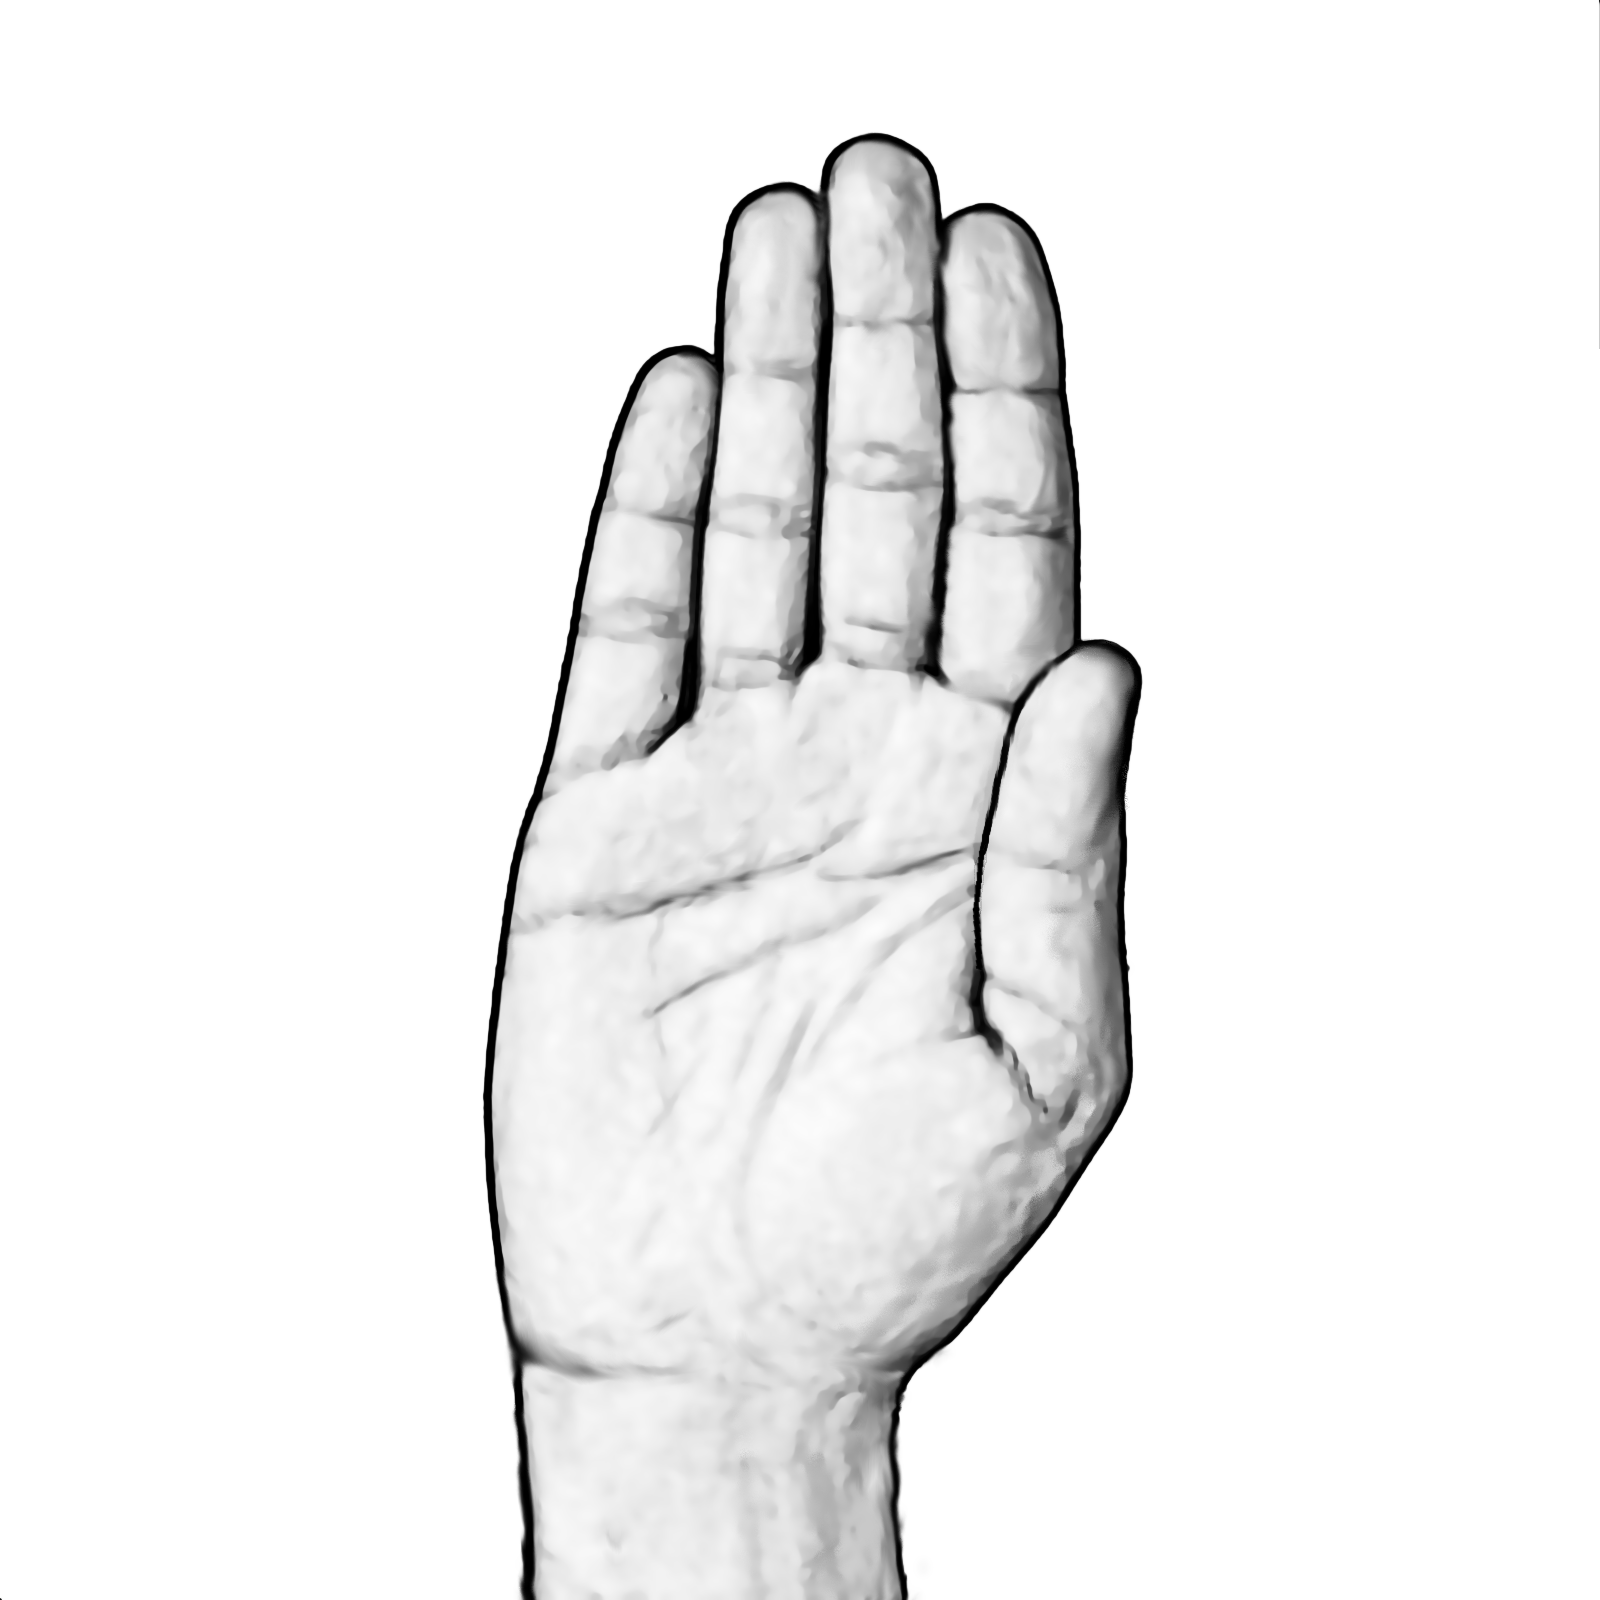 Sign language (ASL) alphabet by Dr. Bill Vicars